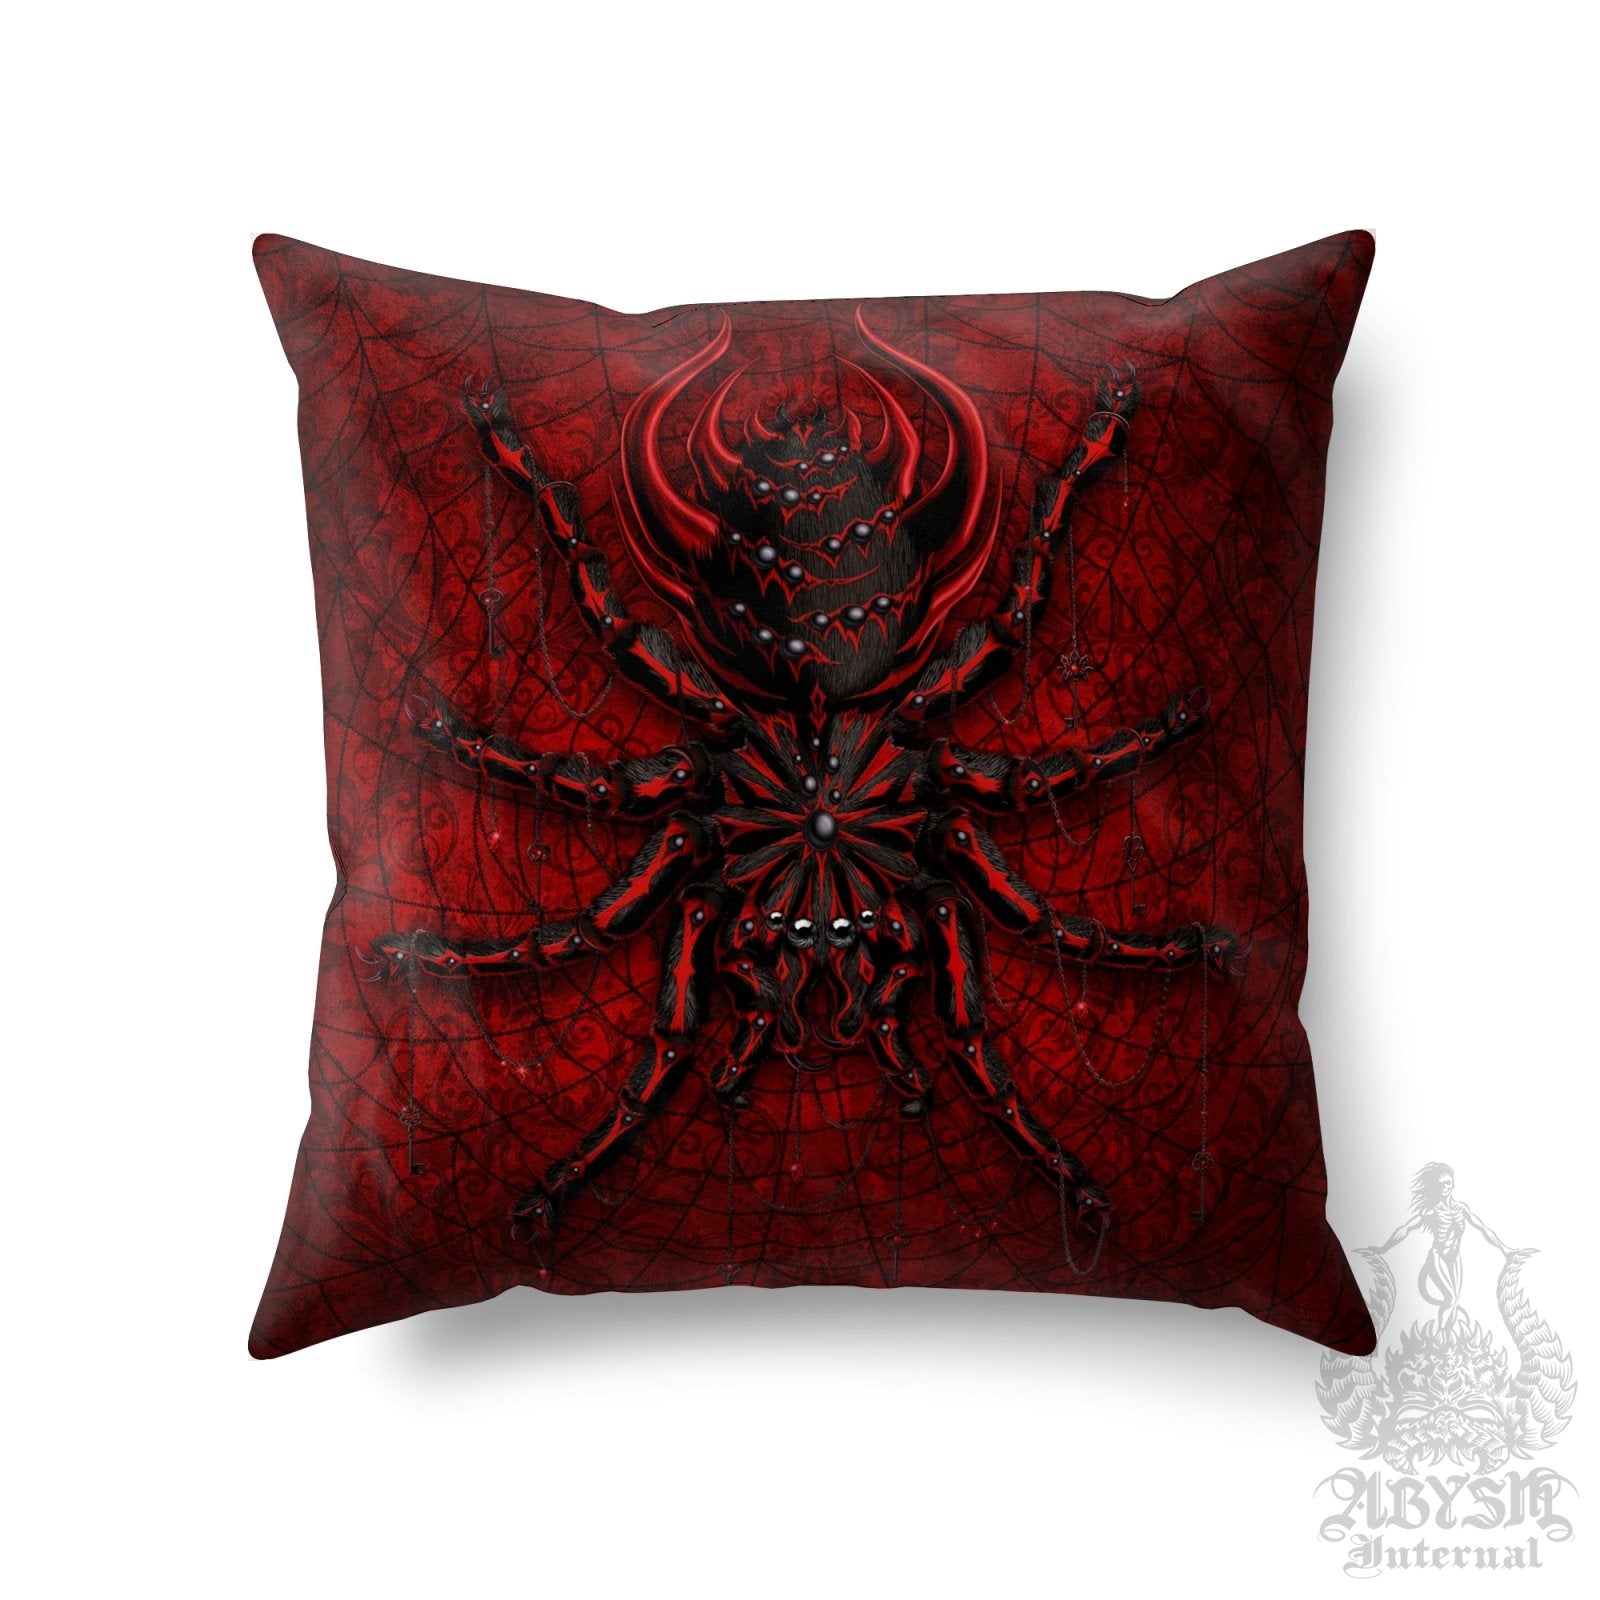 Gothic Throw Pillow, Decorative Accent Cushion, Goth Room Decor, Dark Art, Alternative Home - Tarantula, Bloody Black Spider - Abysm Internal